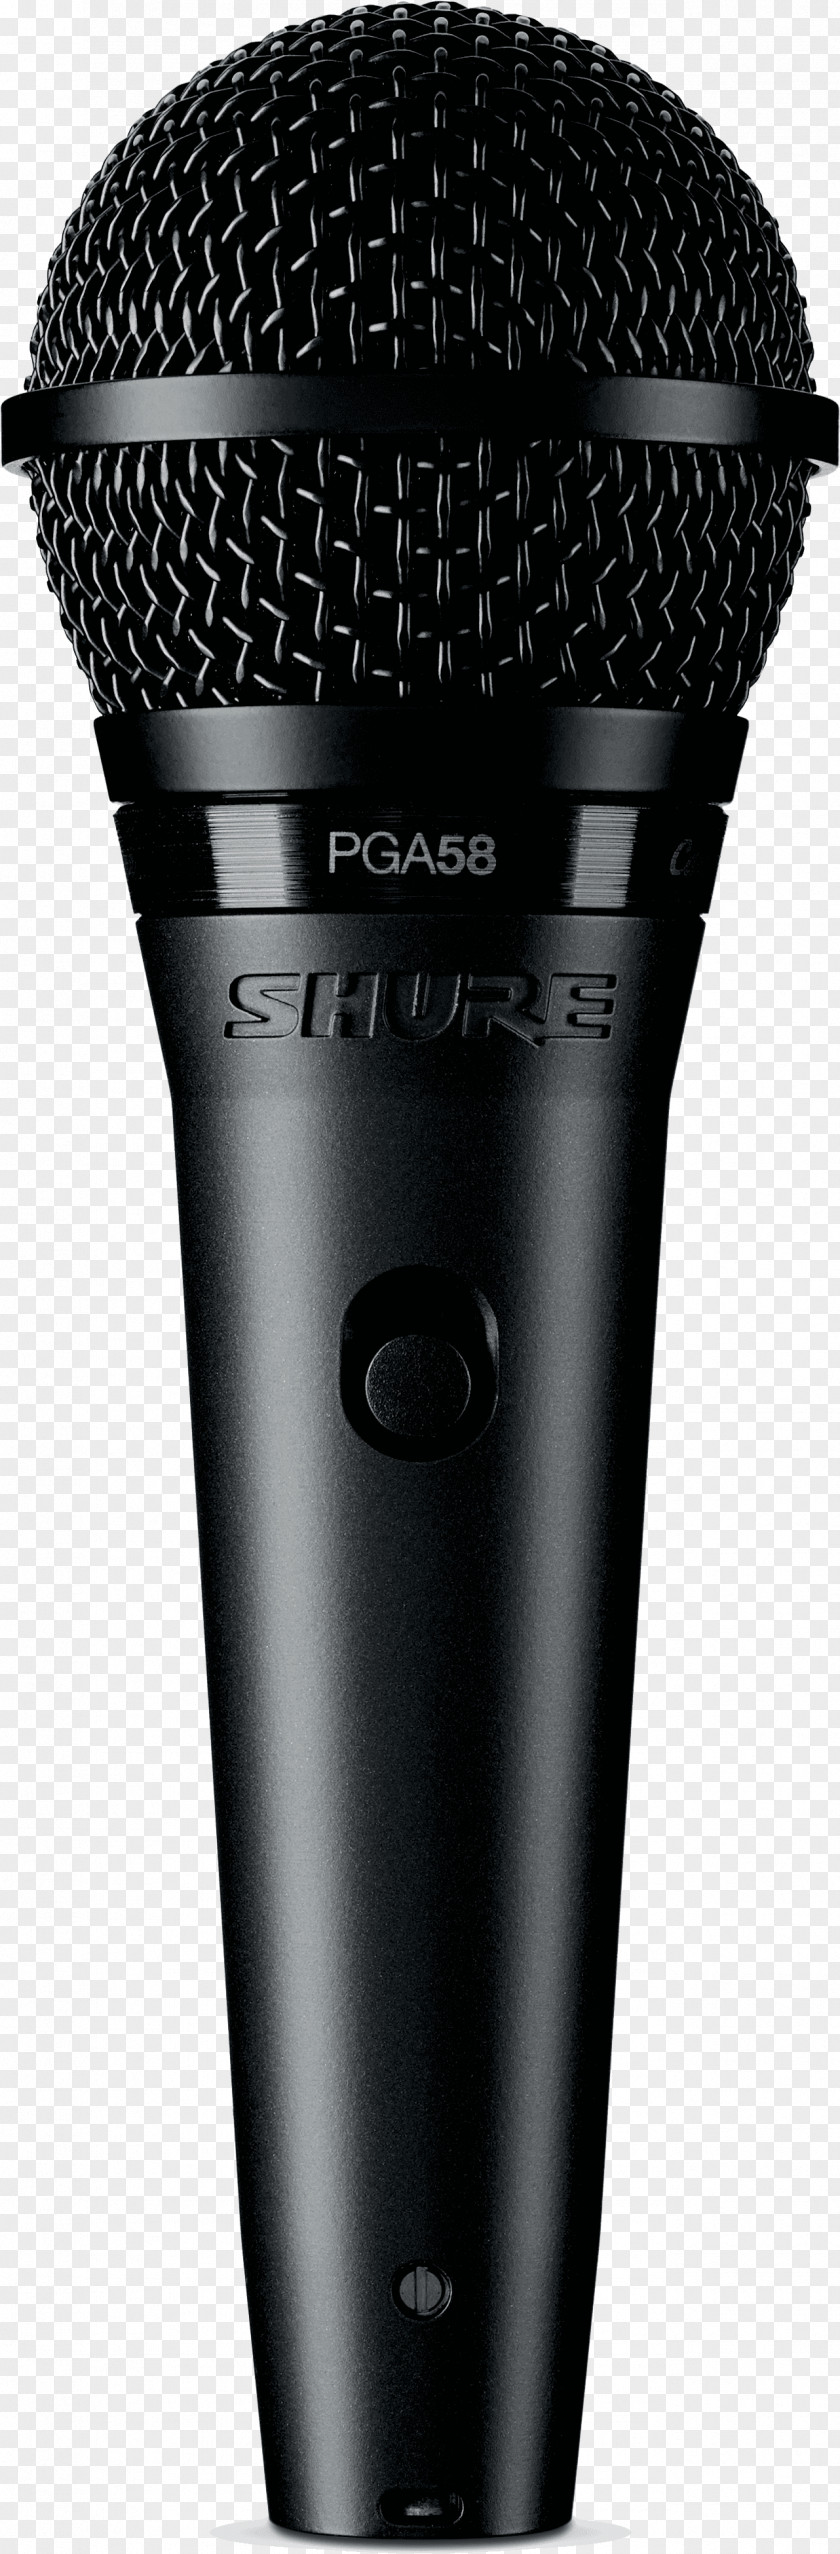 Shure SM58 Microphone PGA58 XLR Connector PNG